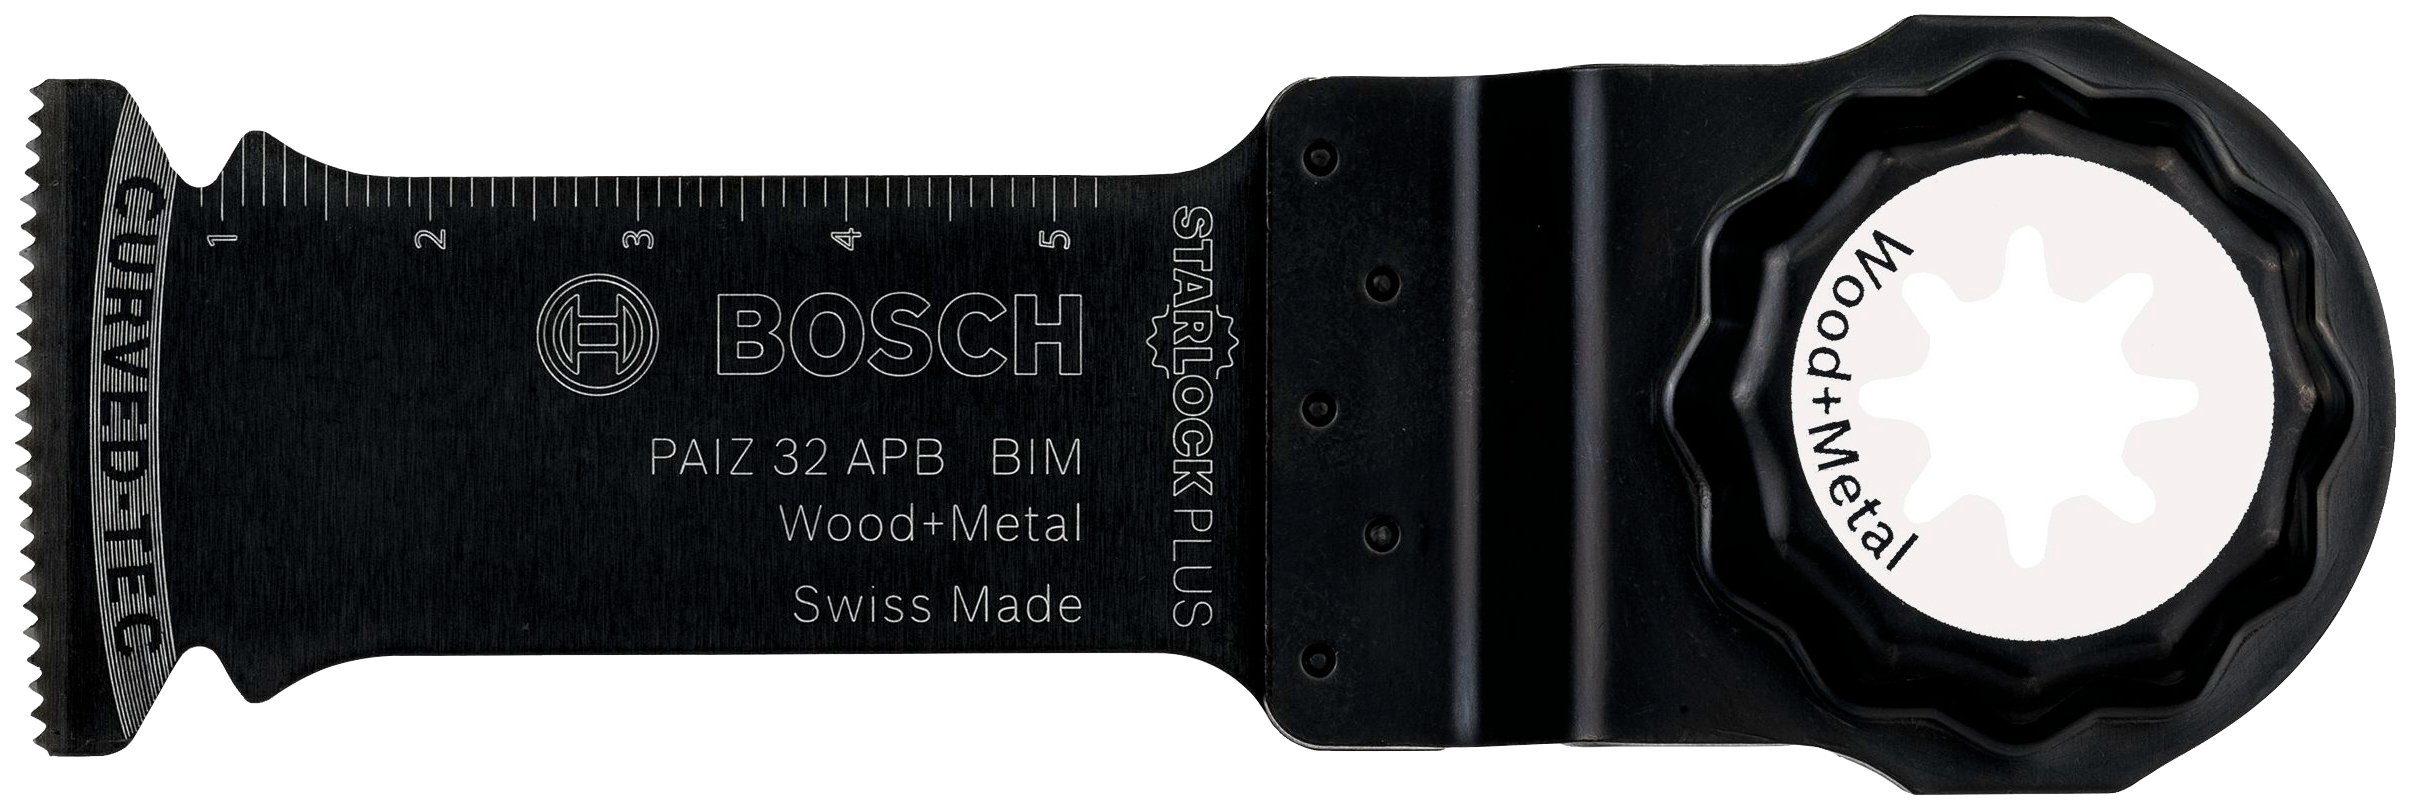 Professional (10-St) RB APB Tauchsägeblatt mm 60 Bosch 32 PAIZ32 x